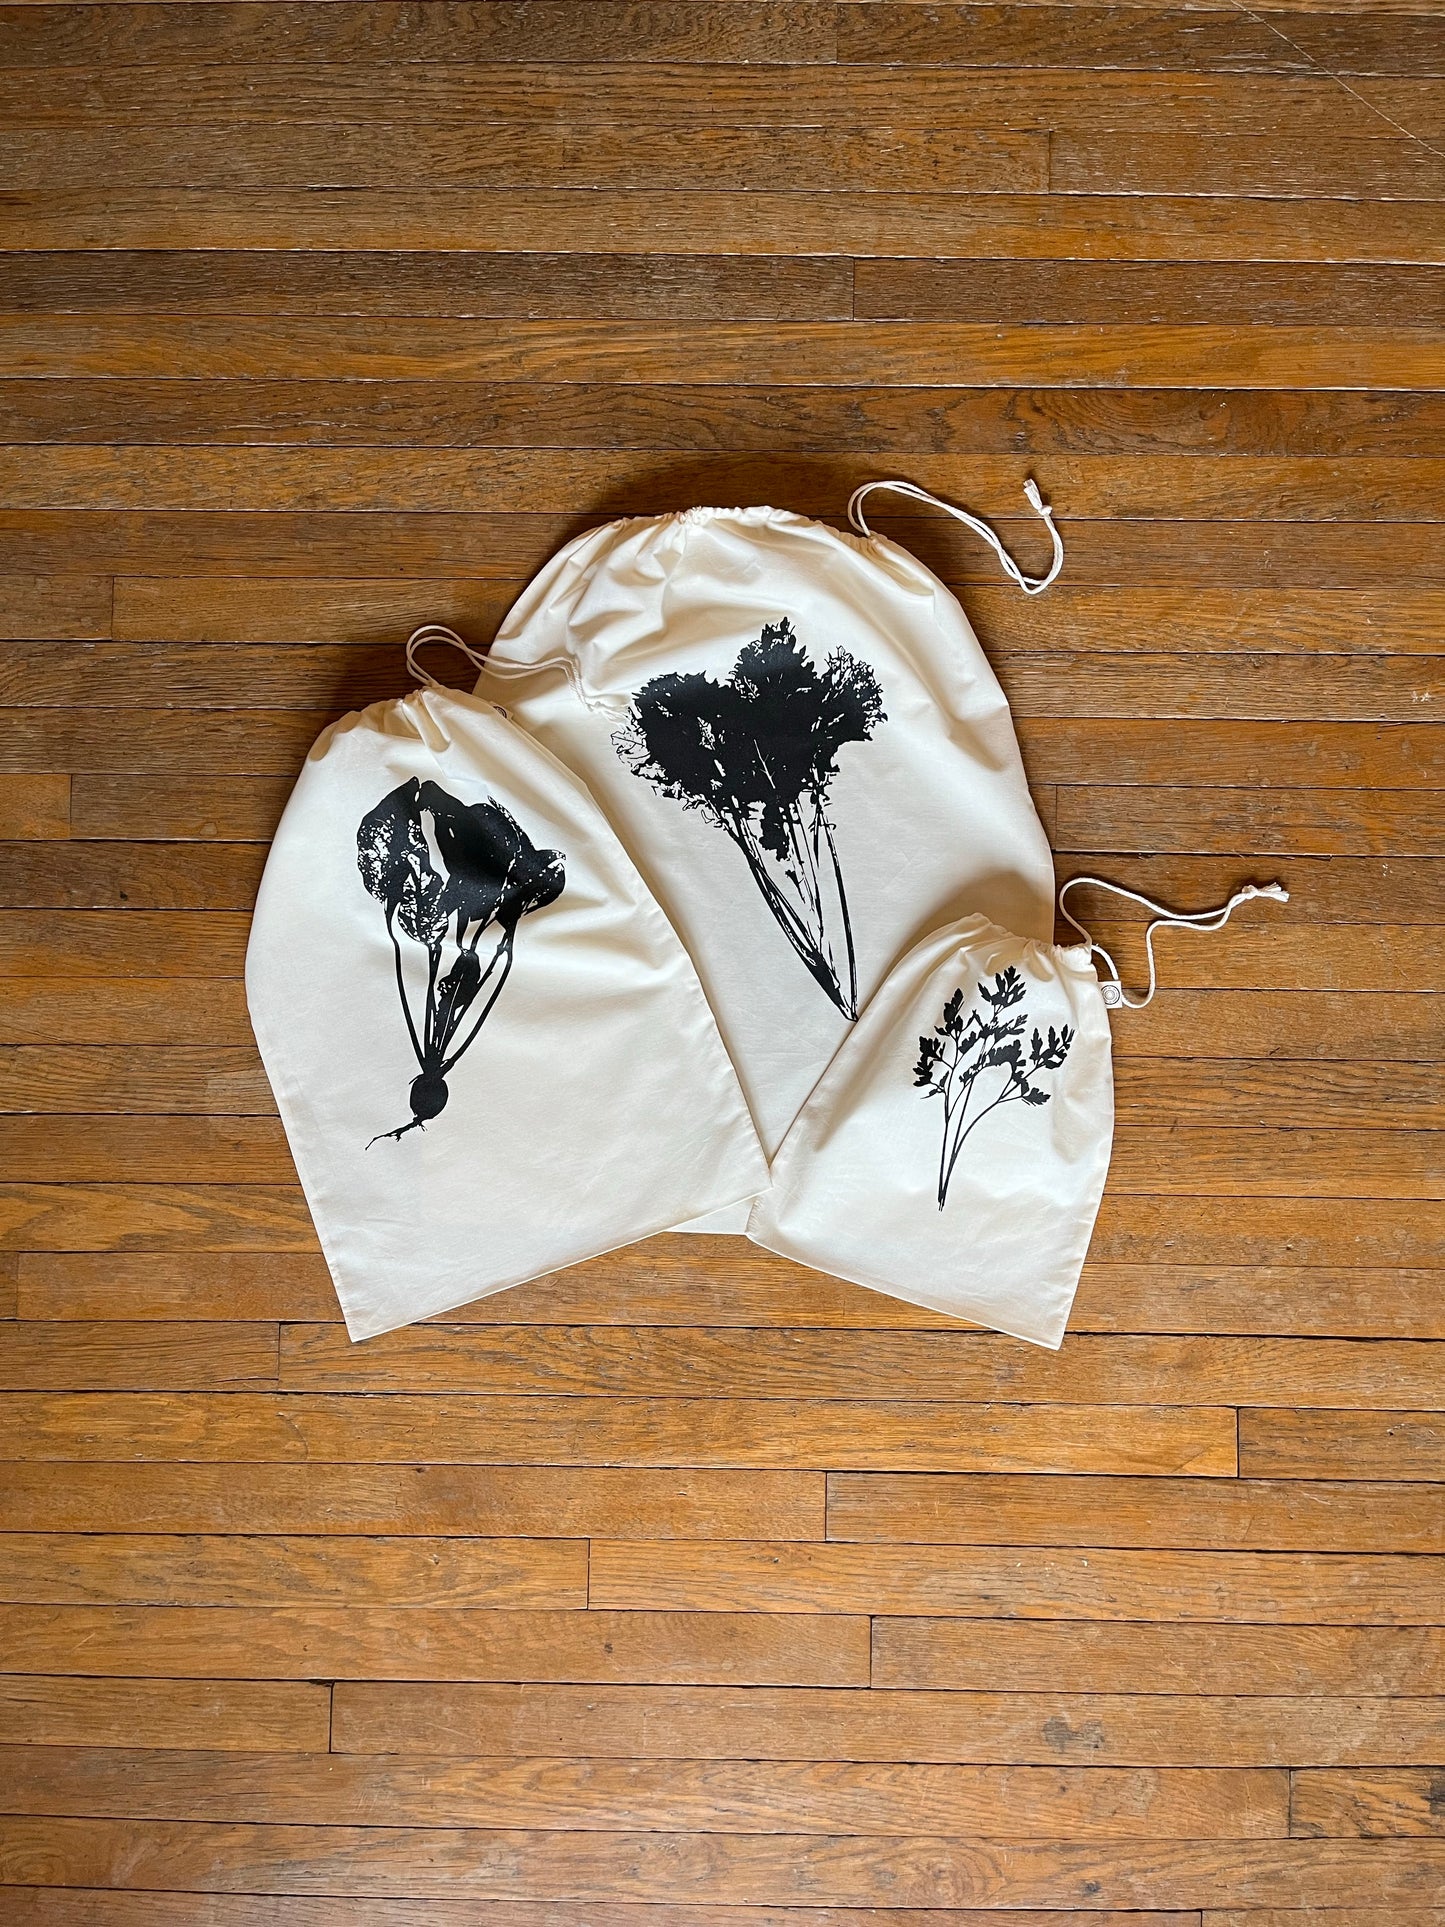 Three muslin, drawstring produce bags lie on a hardwood floor